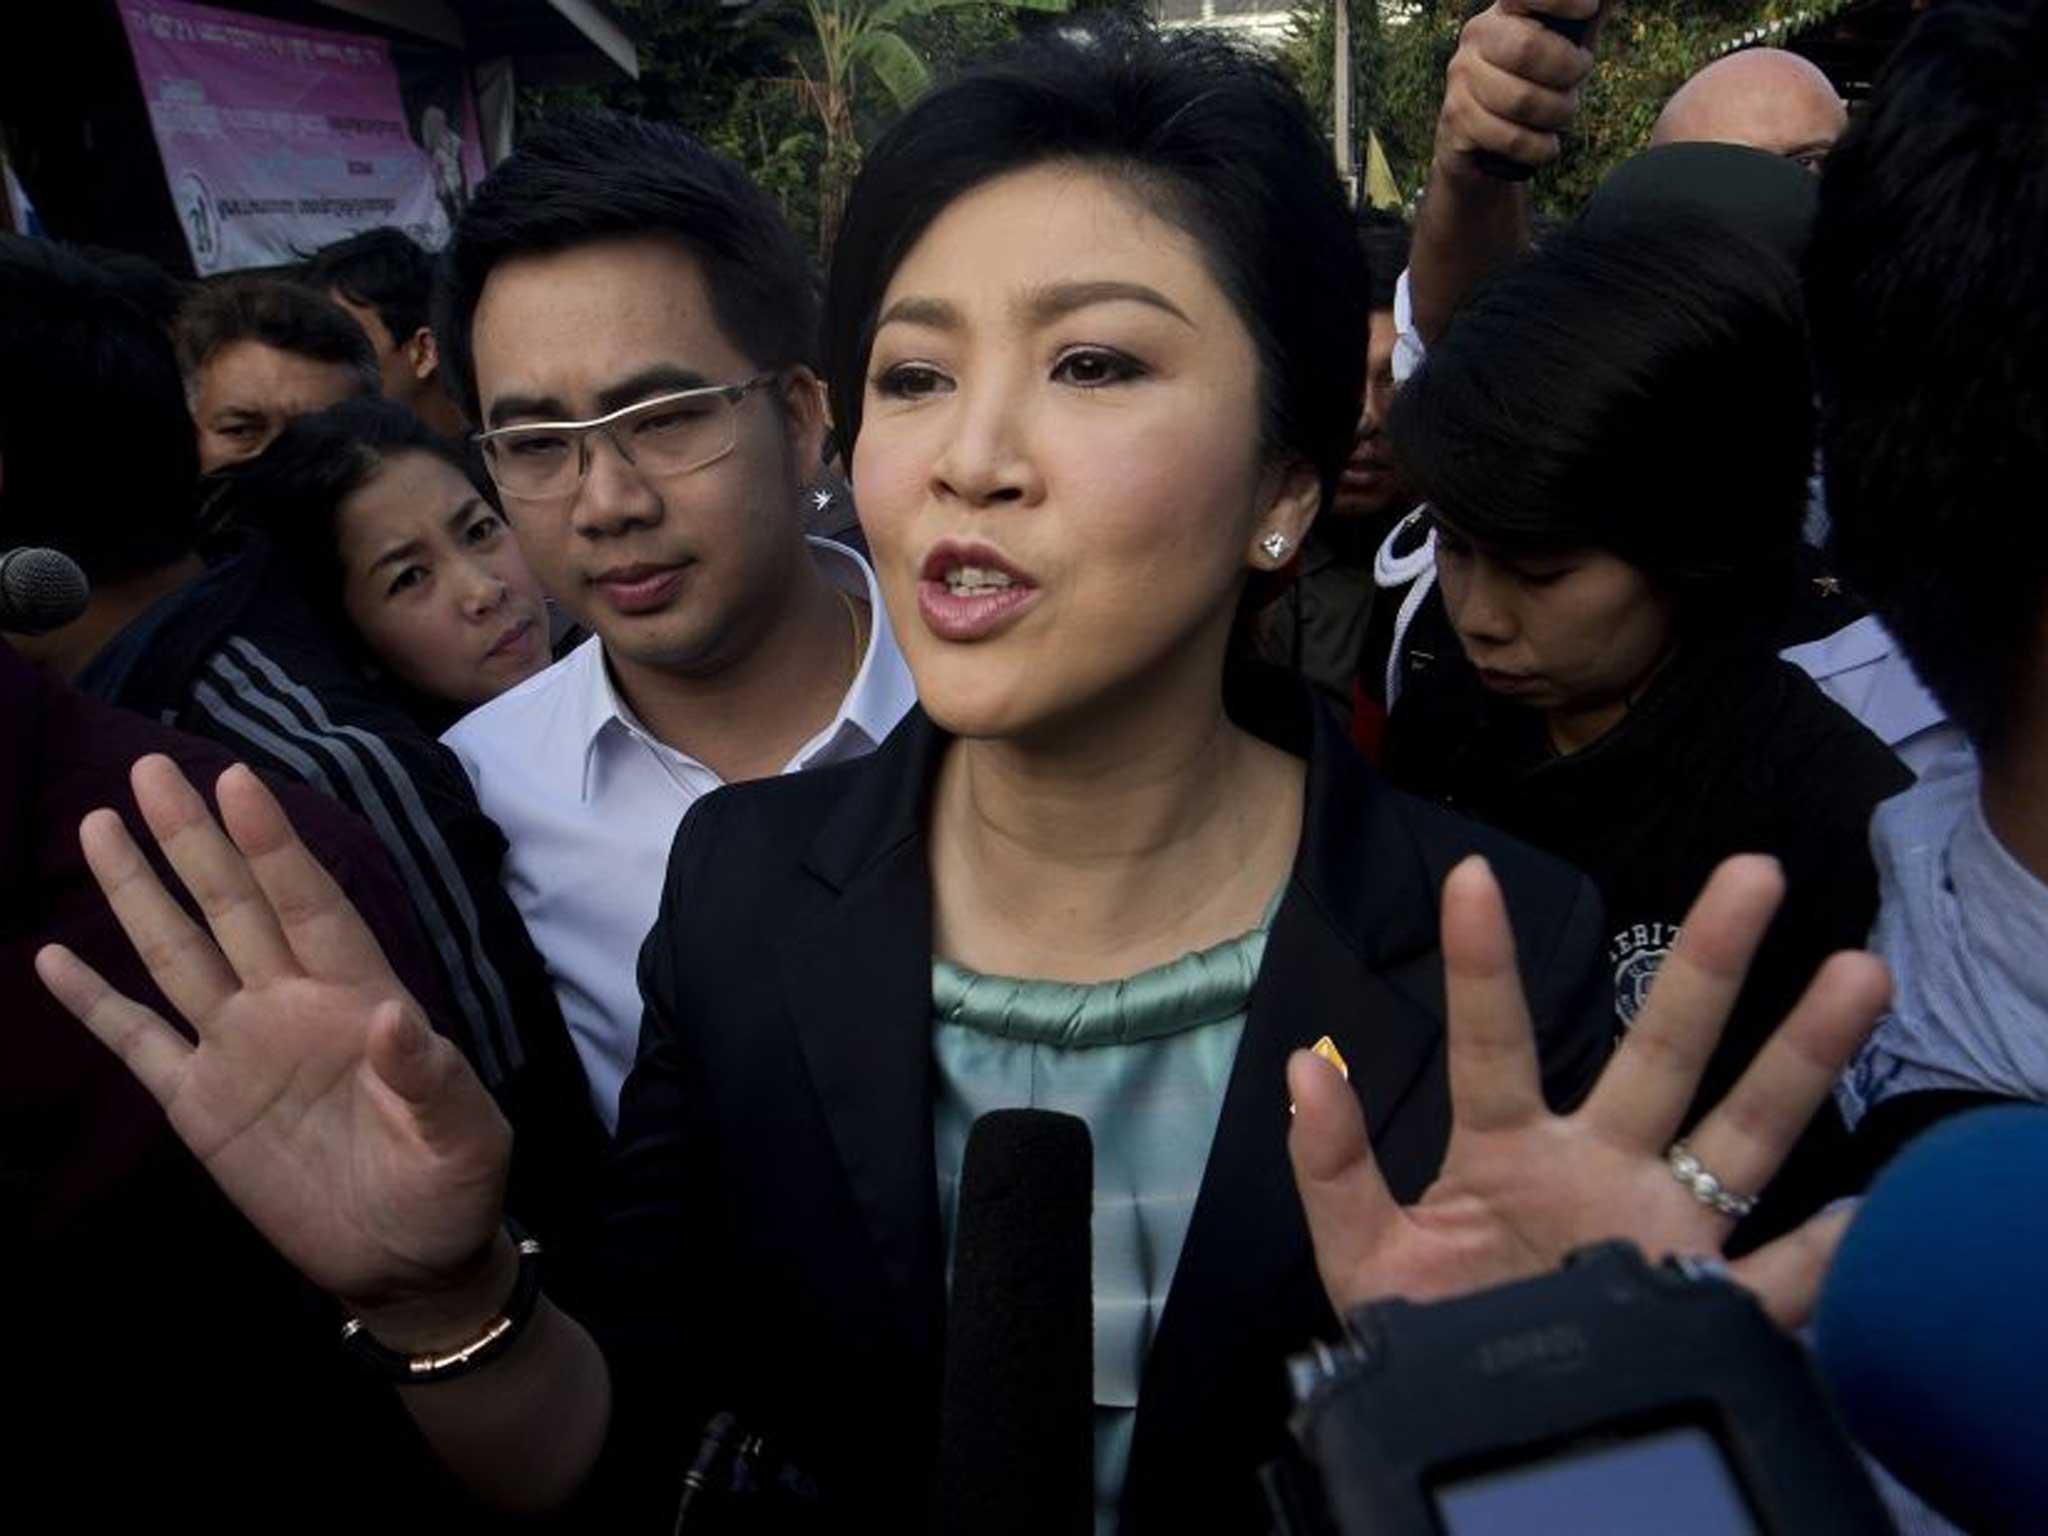 Back to the wall: Premier Yingluck Shinawatra